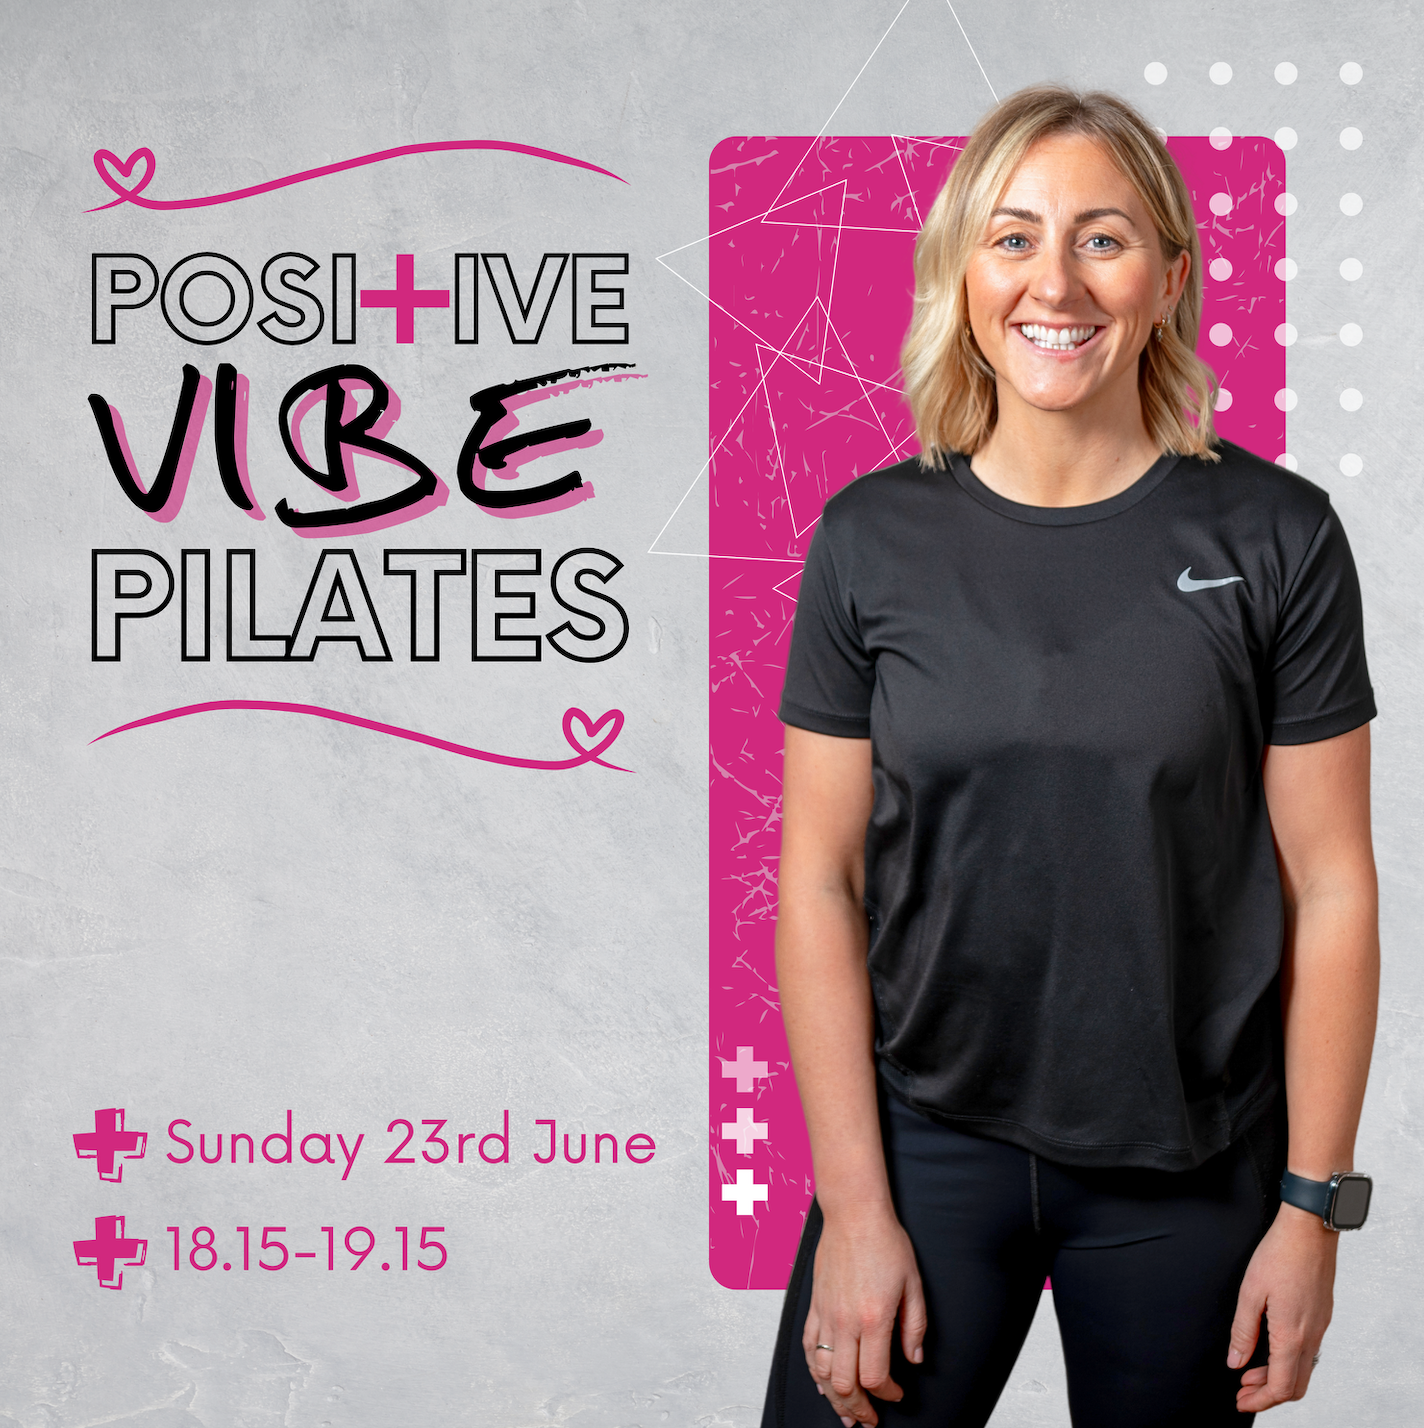 Positive Vibe Pilates